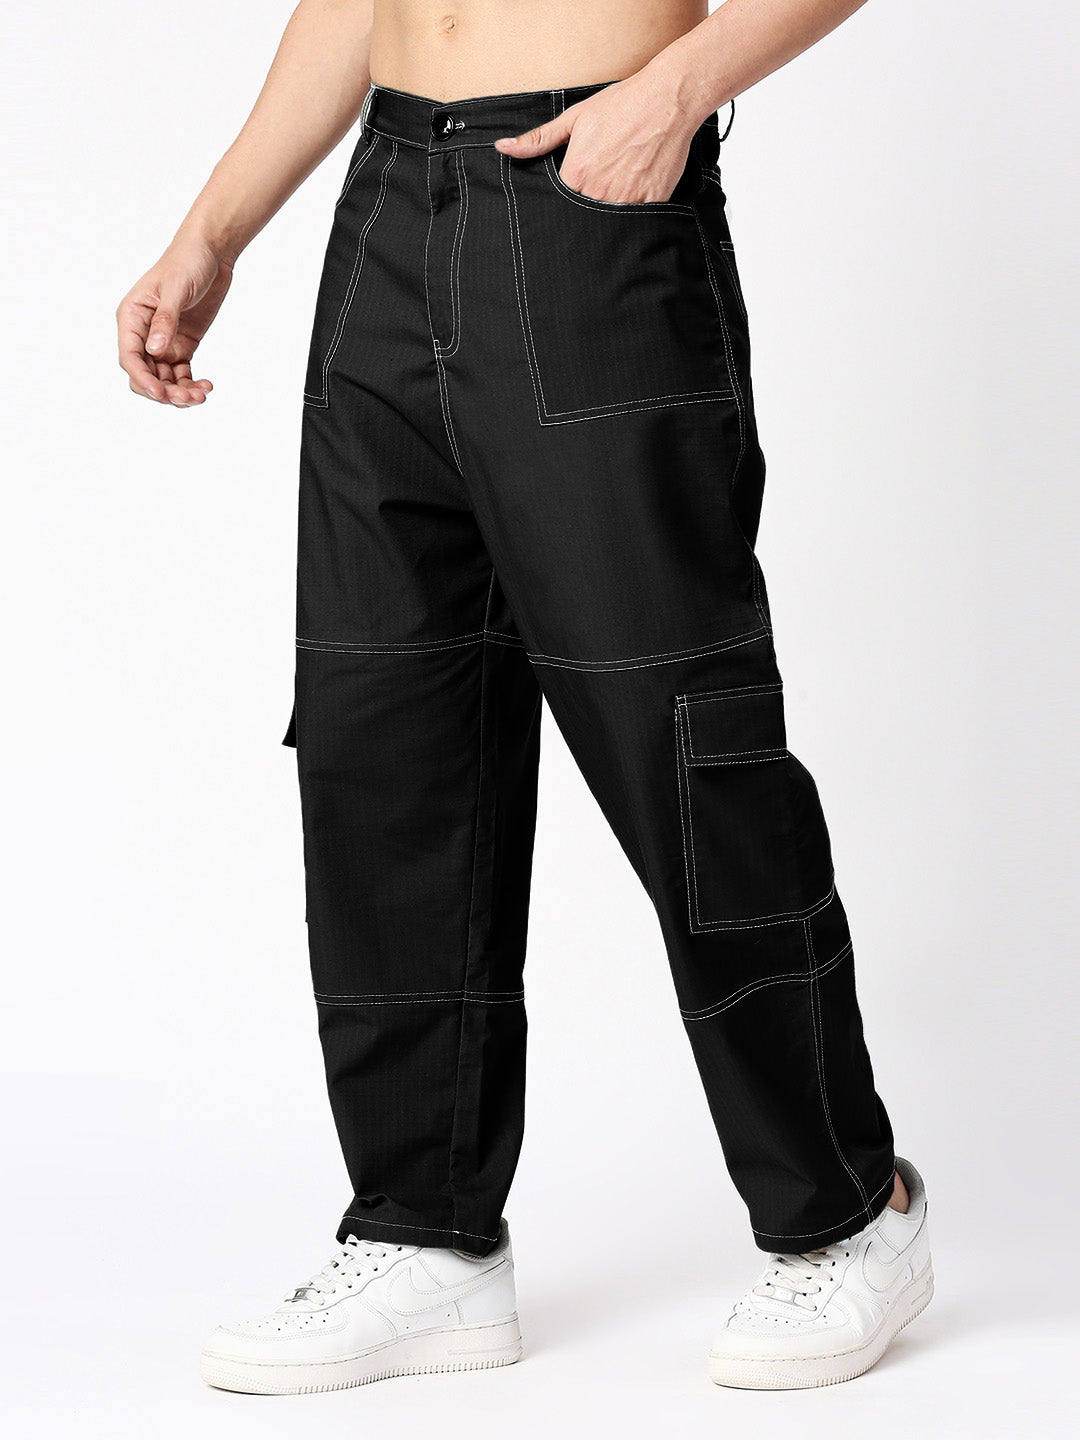 BLAMBLACK Men's Cargo Style Jacket With Pant Black Color Co-Ord Set